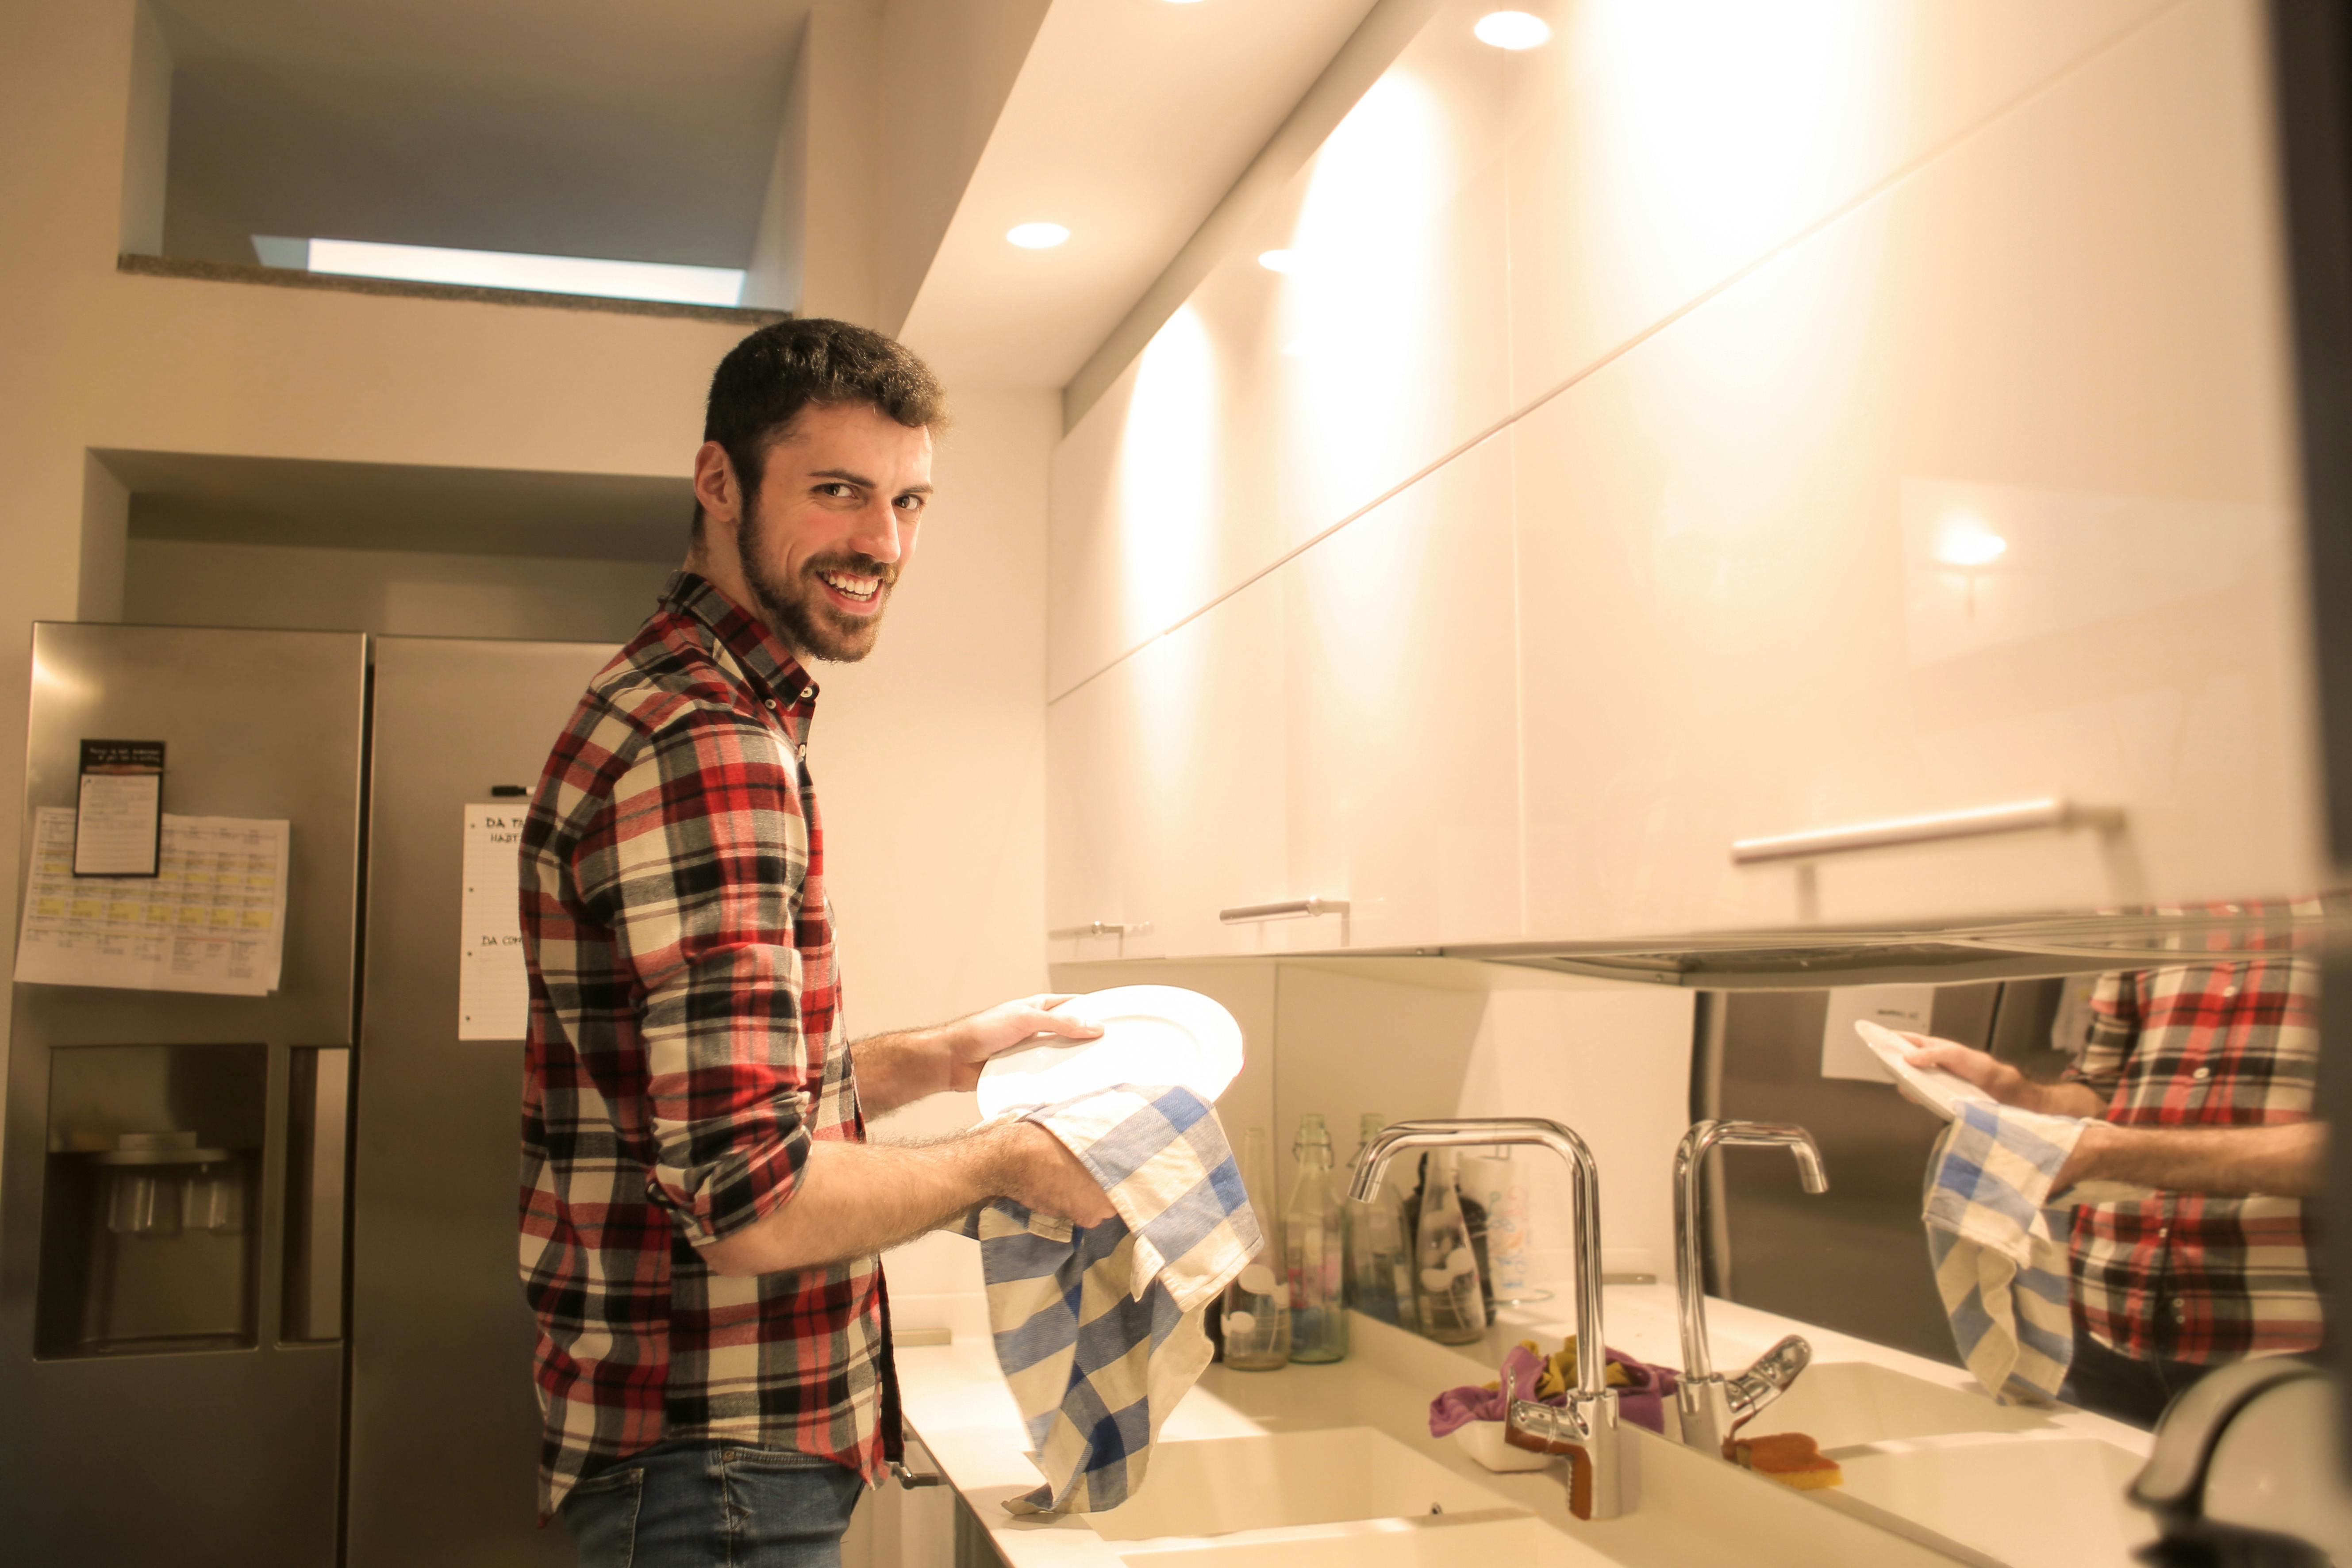 Mann lächelt beim Abwasch | Quelle: Pexels